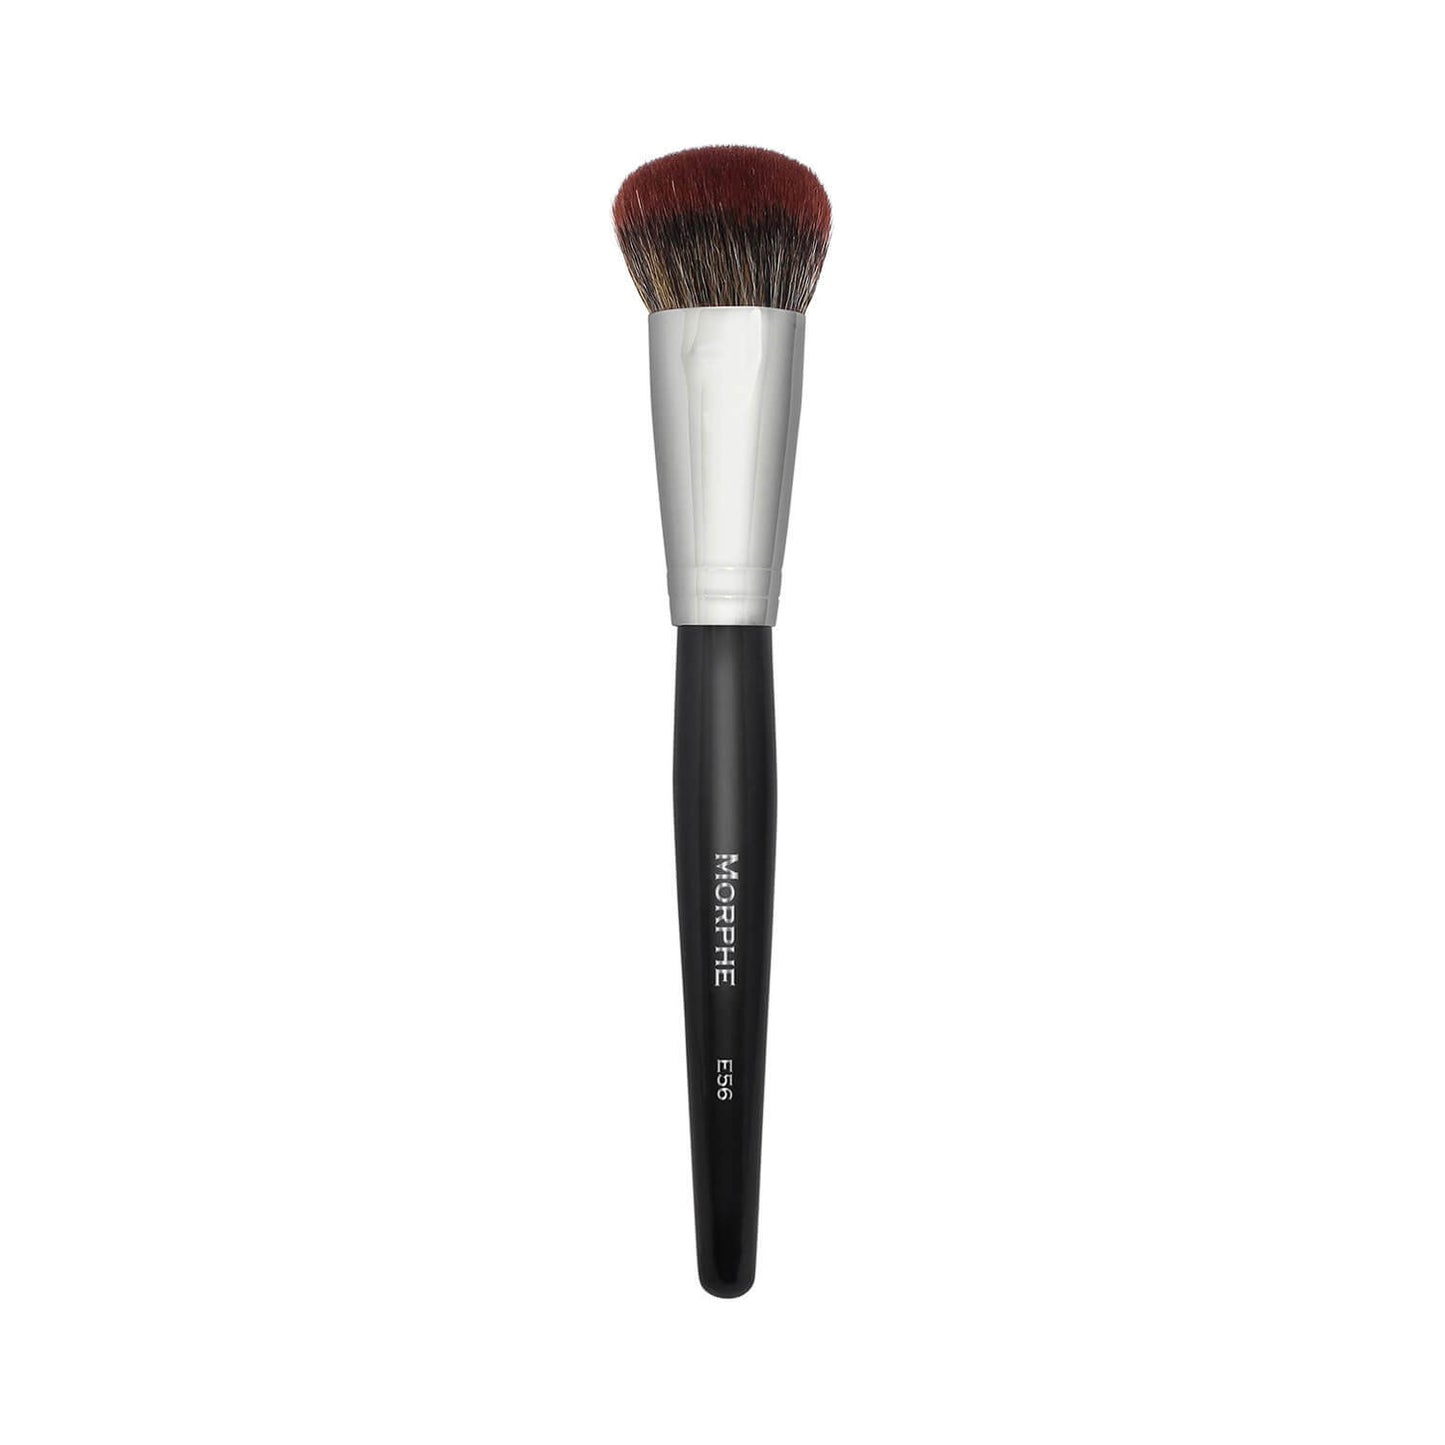 Morphe Cosmetics E56 Deluxe Under Eye Powder Brush